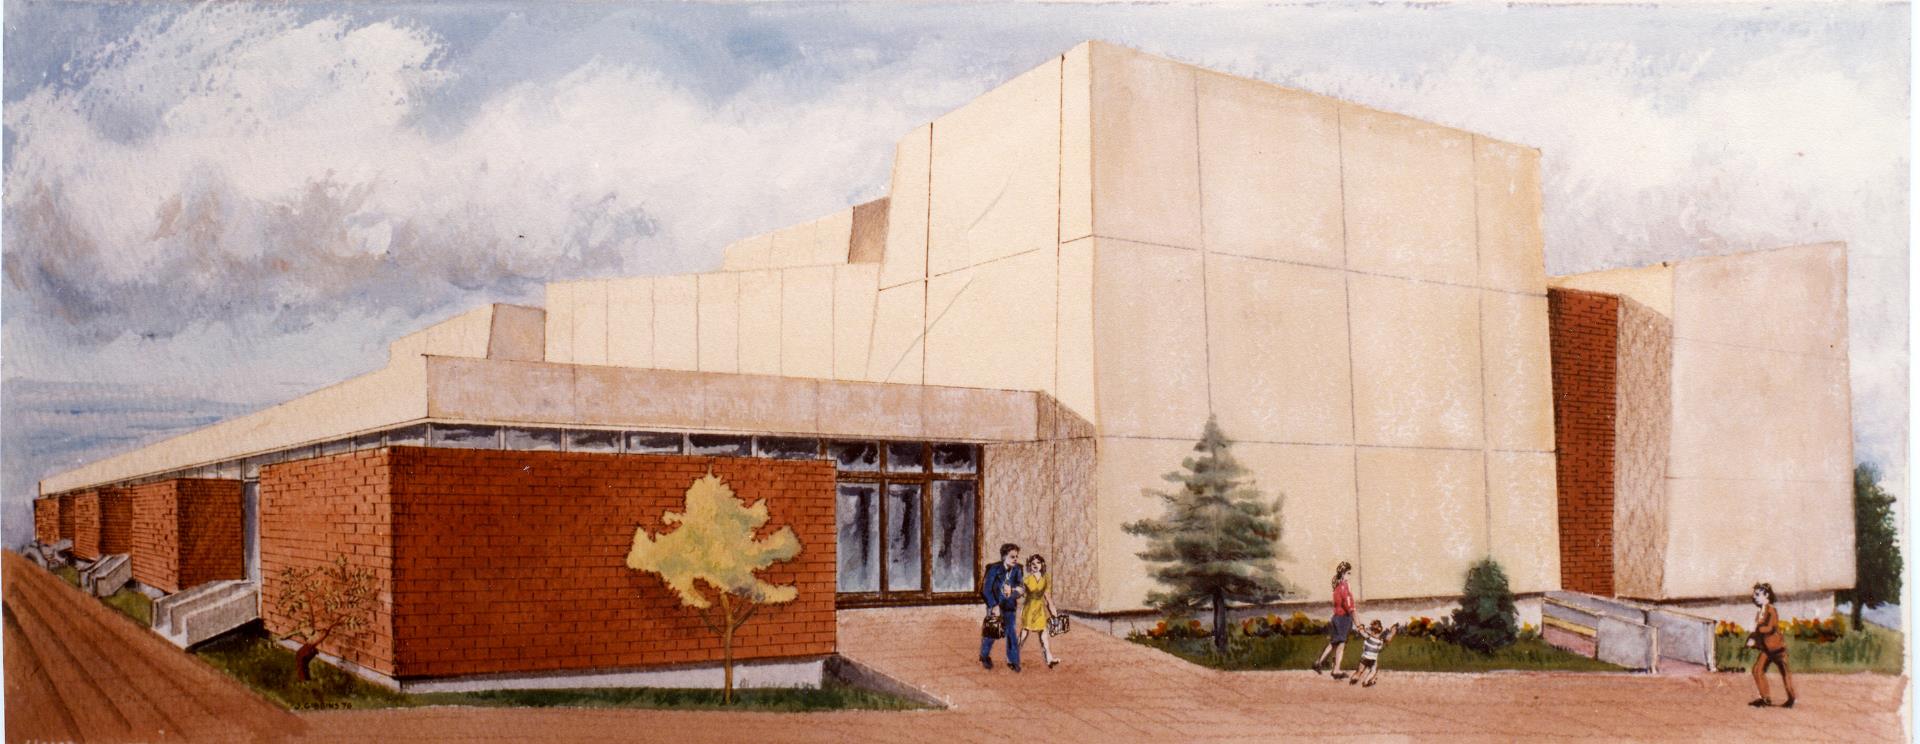 Civic centre Artists Impression 1976